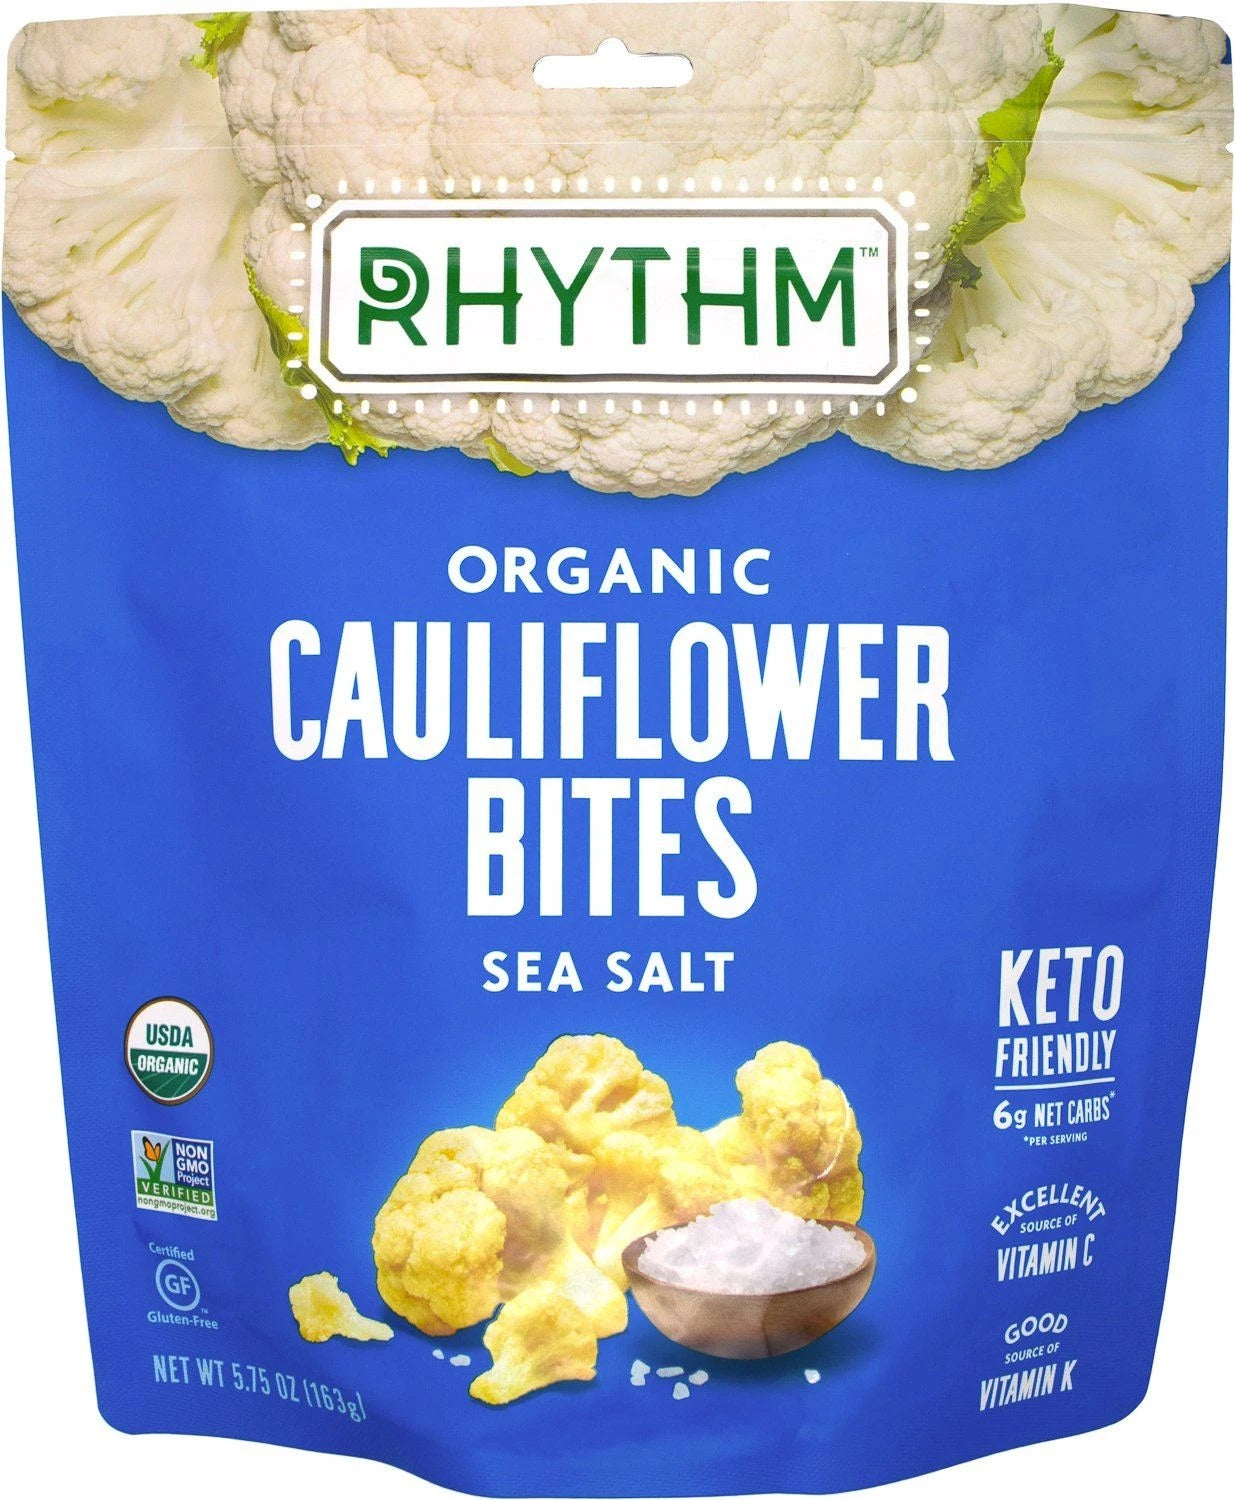 Rhythm Organic Cauliflower Bites, Sea Salt